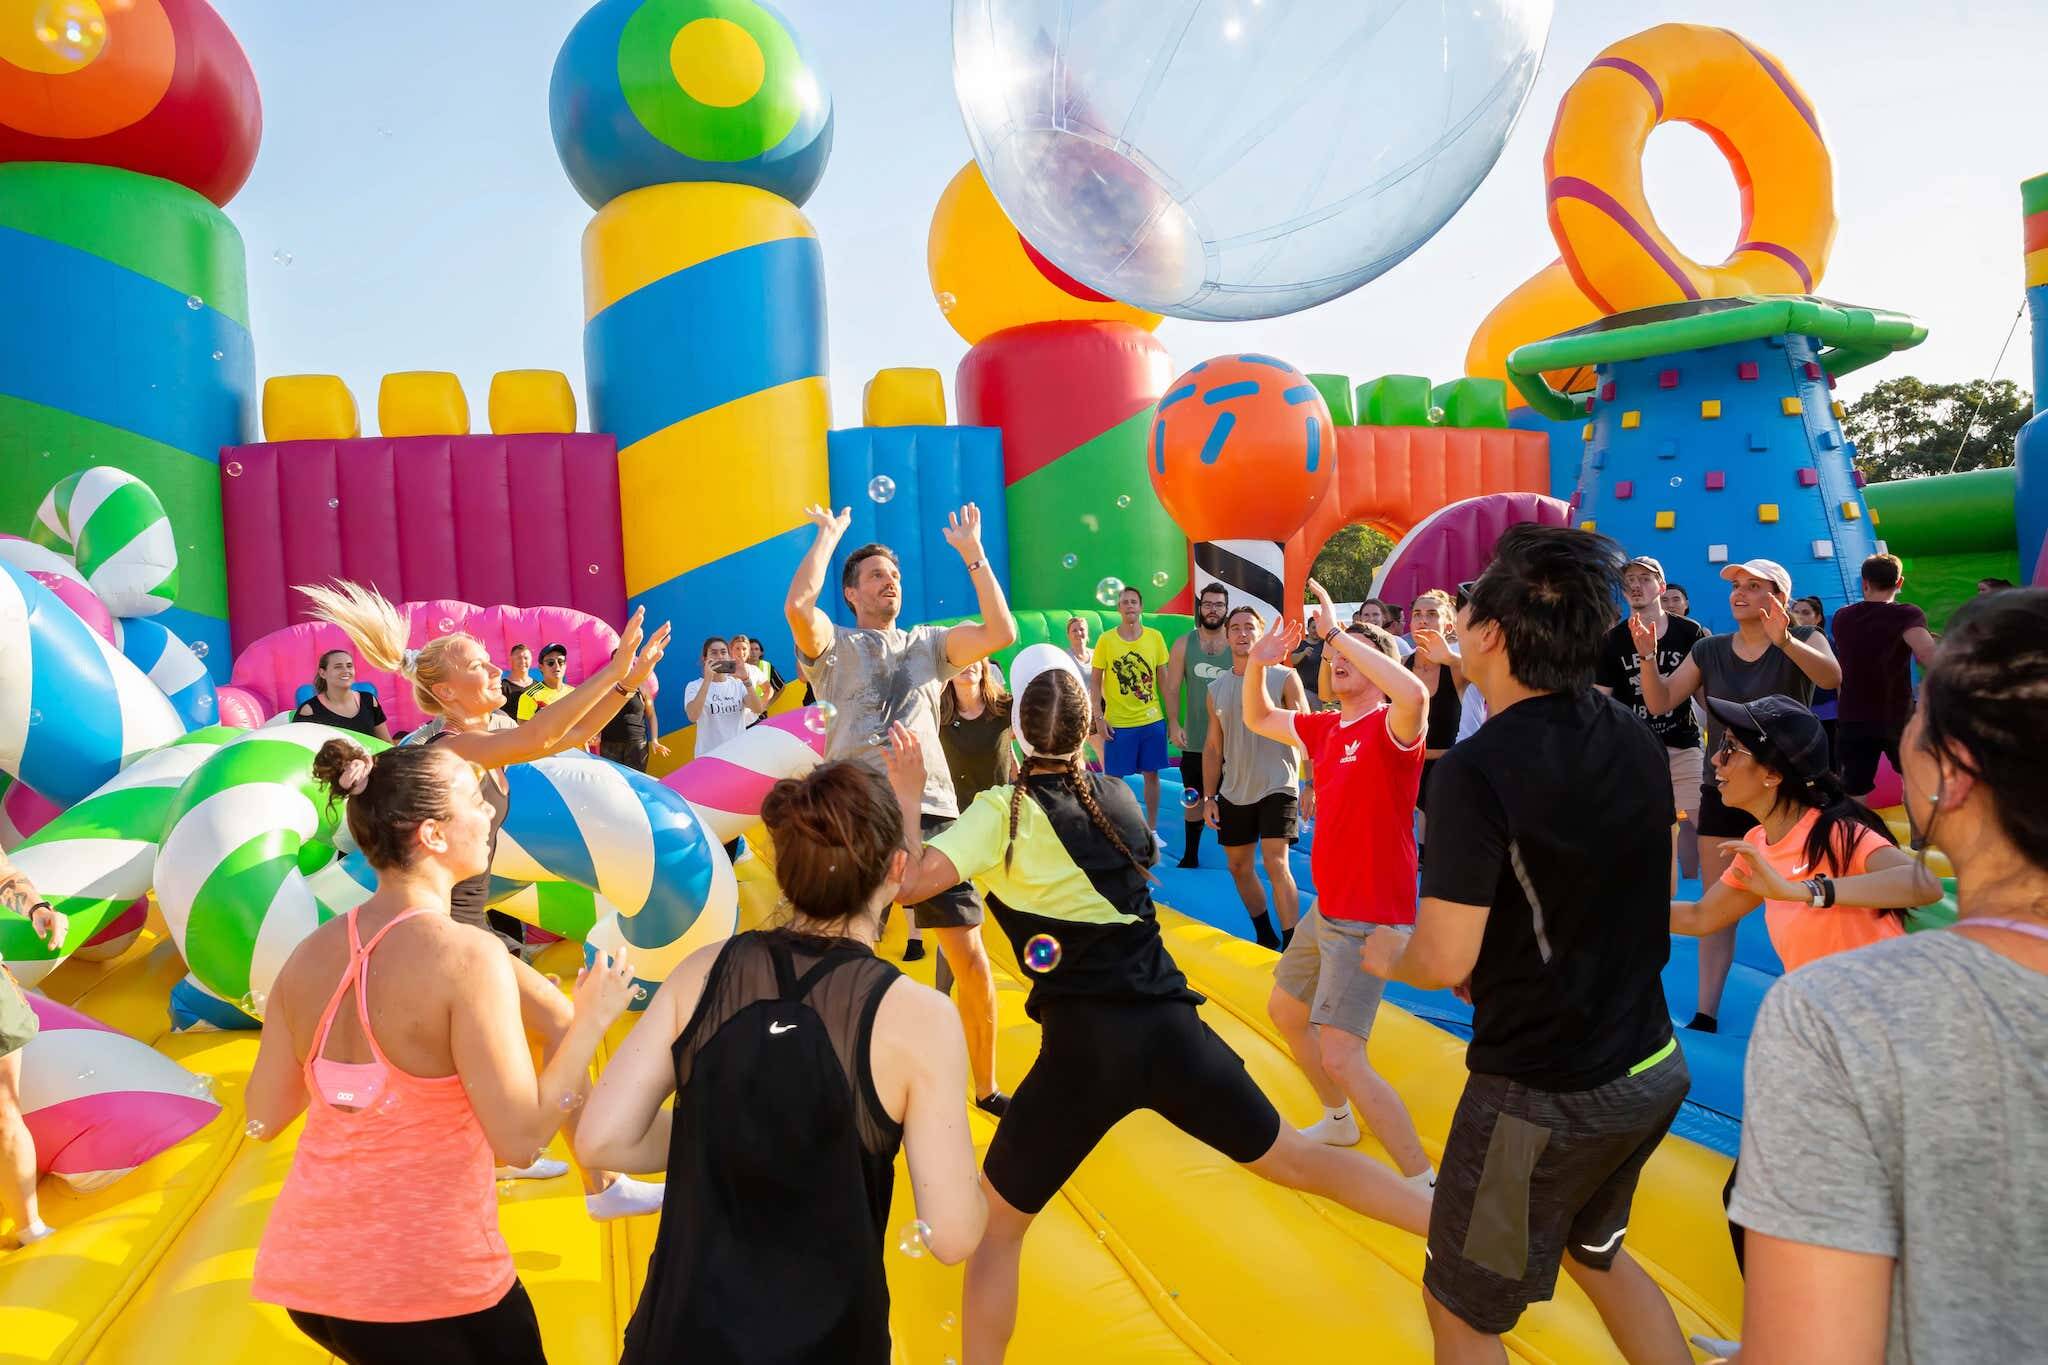 bouncy castle festival toronto